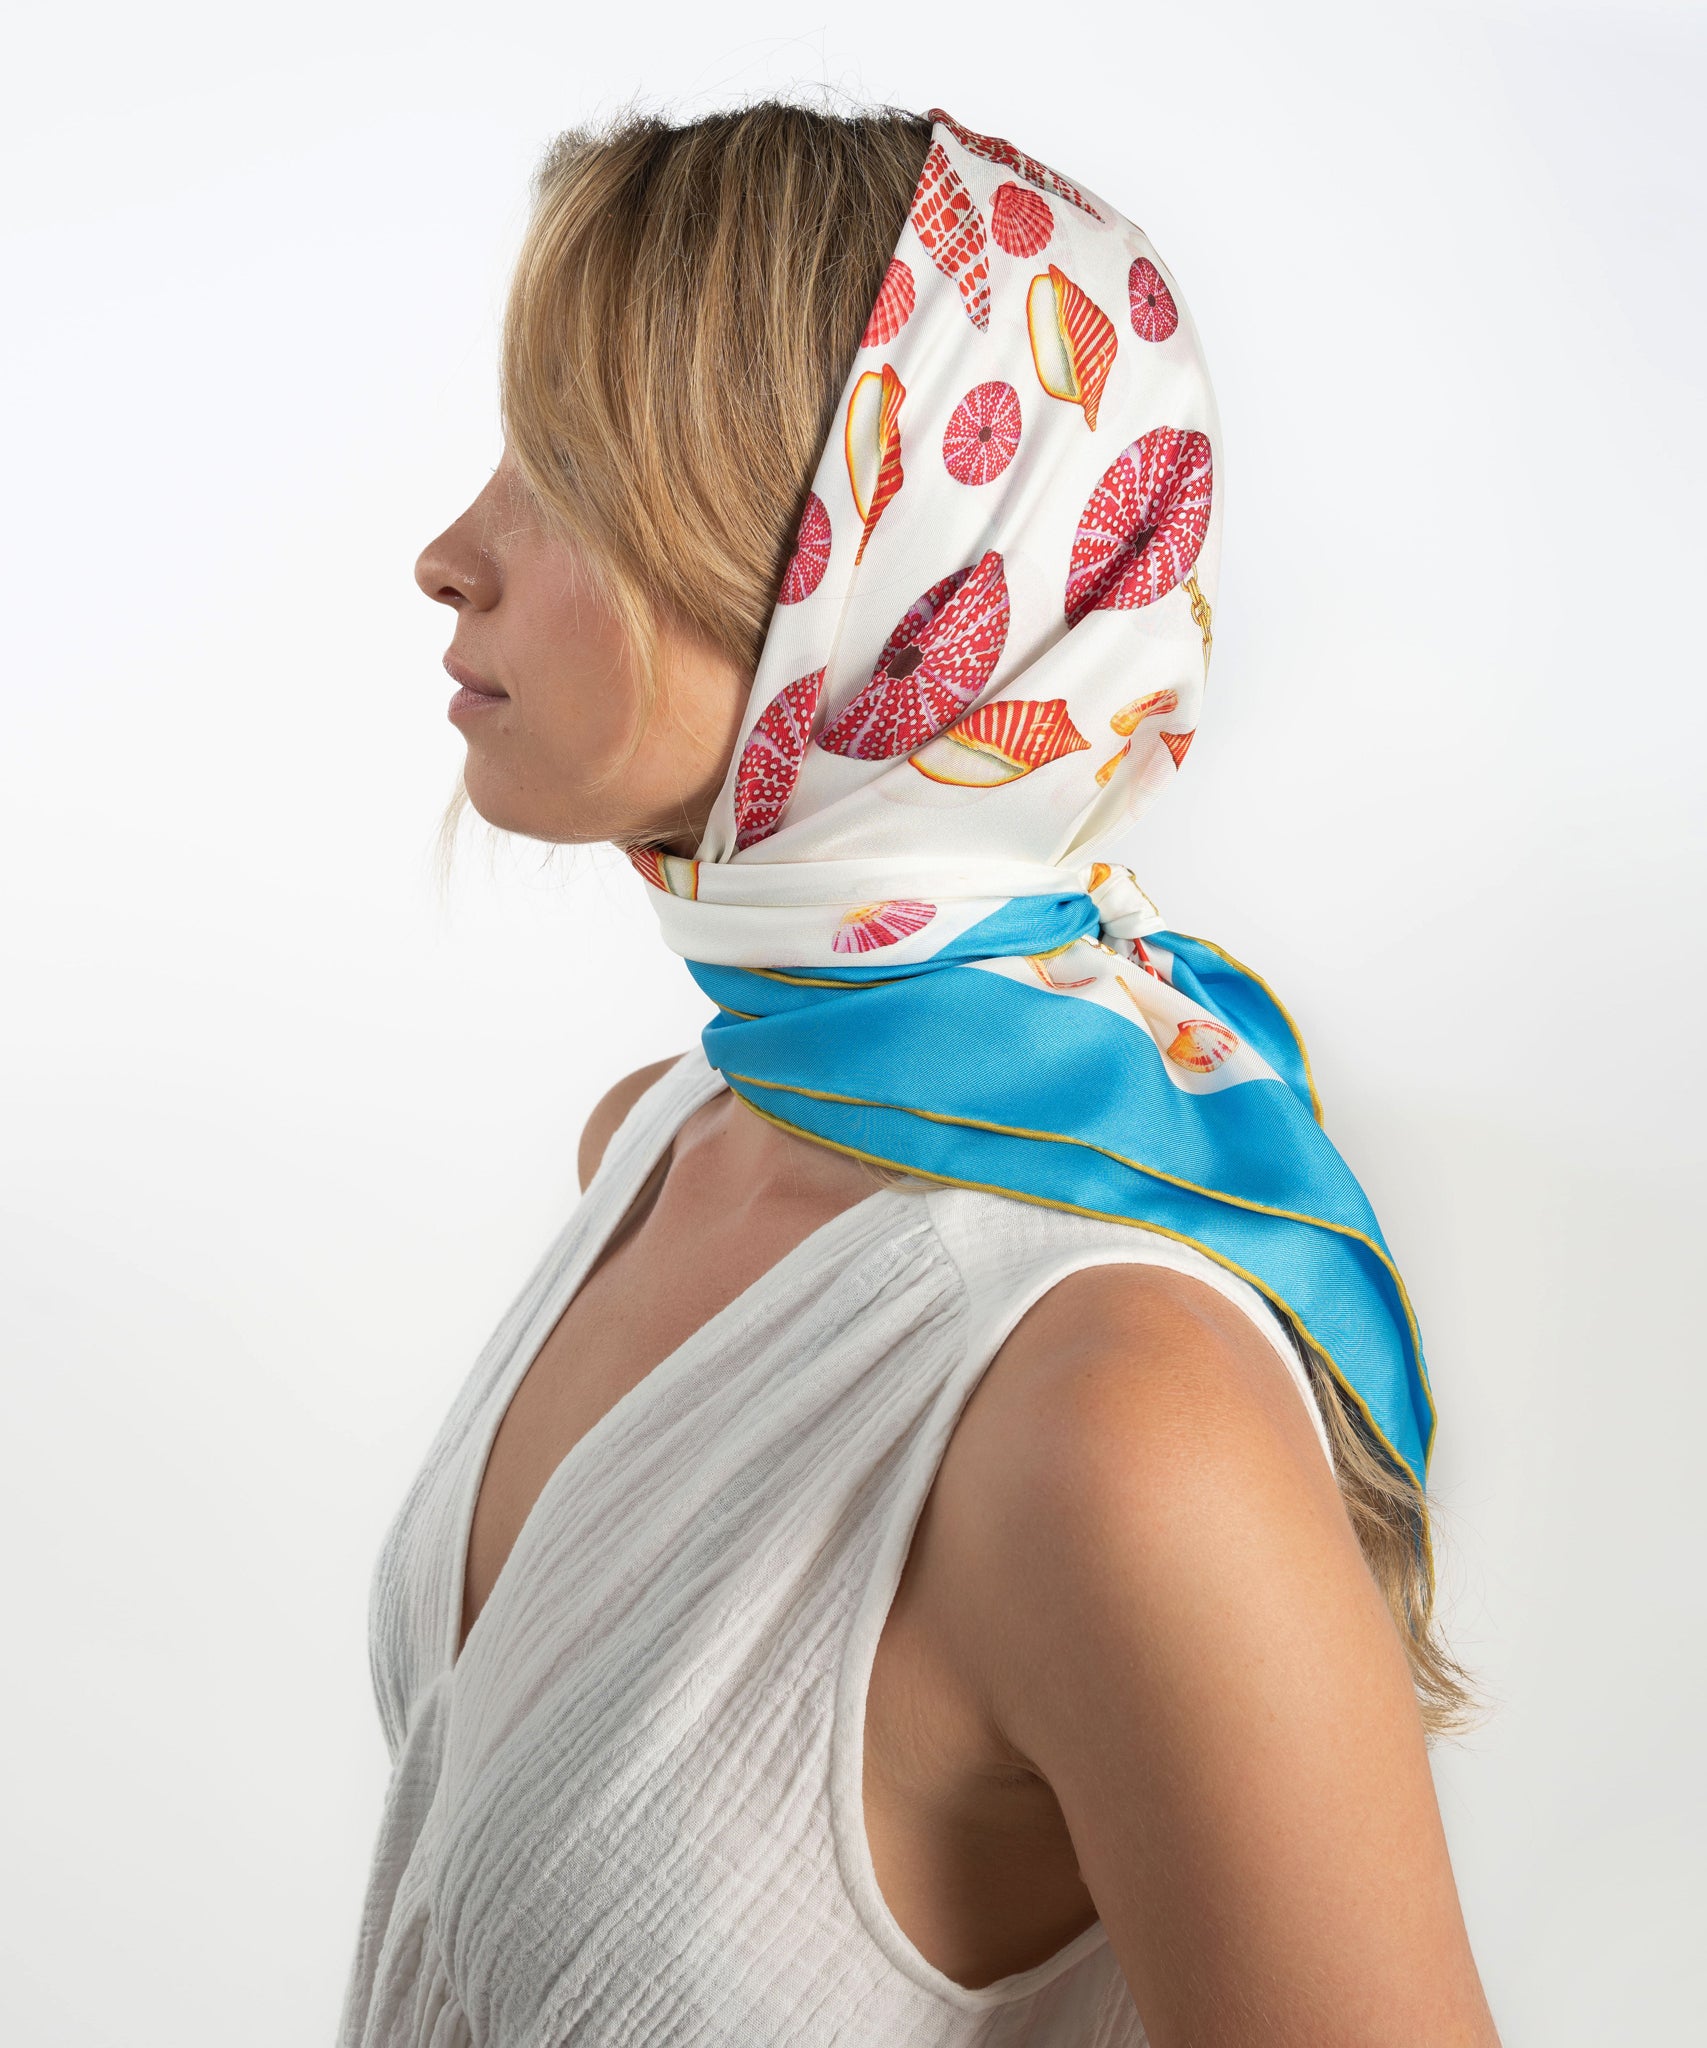 Louis vuitton scarf shawl - Gem